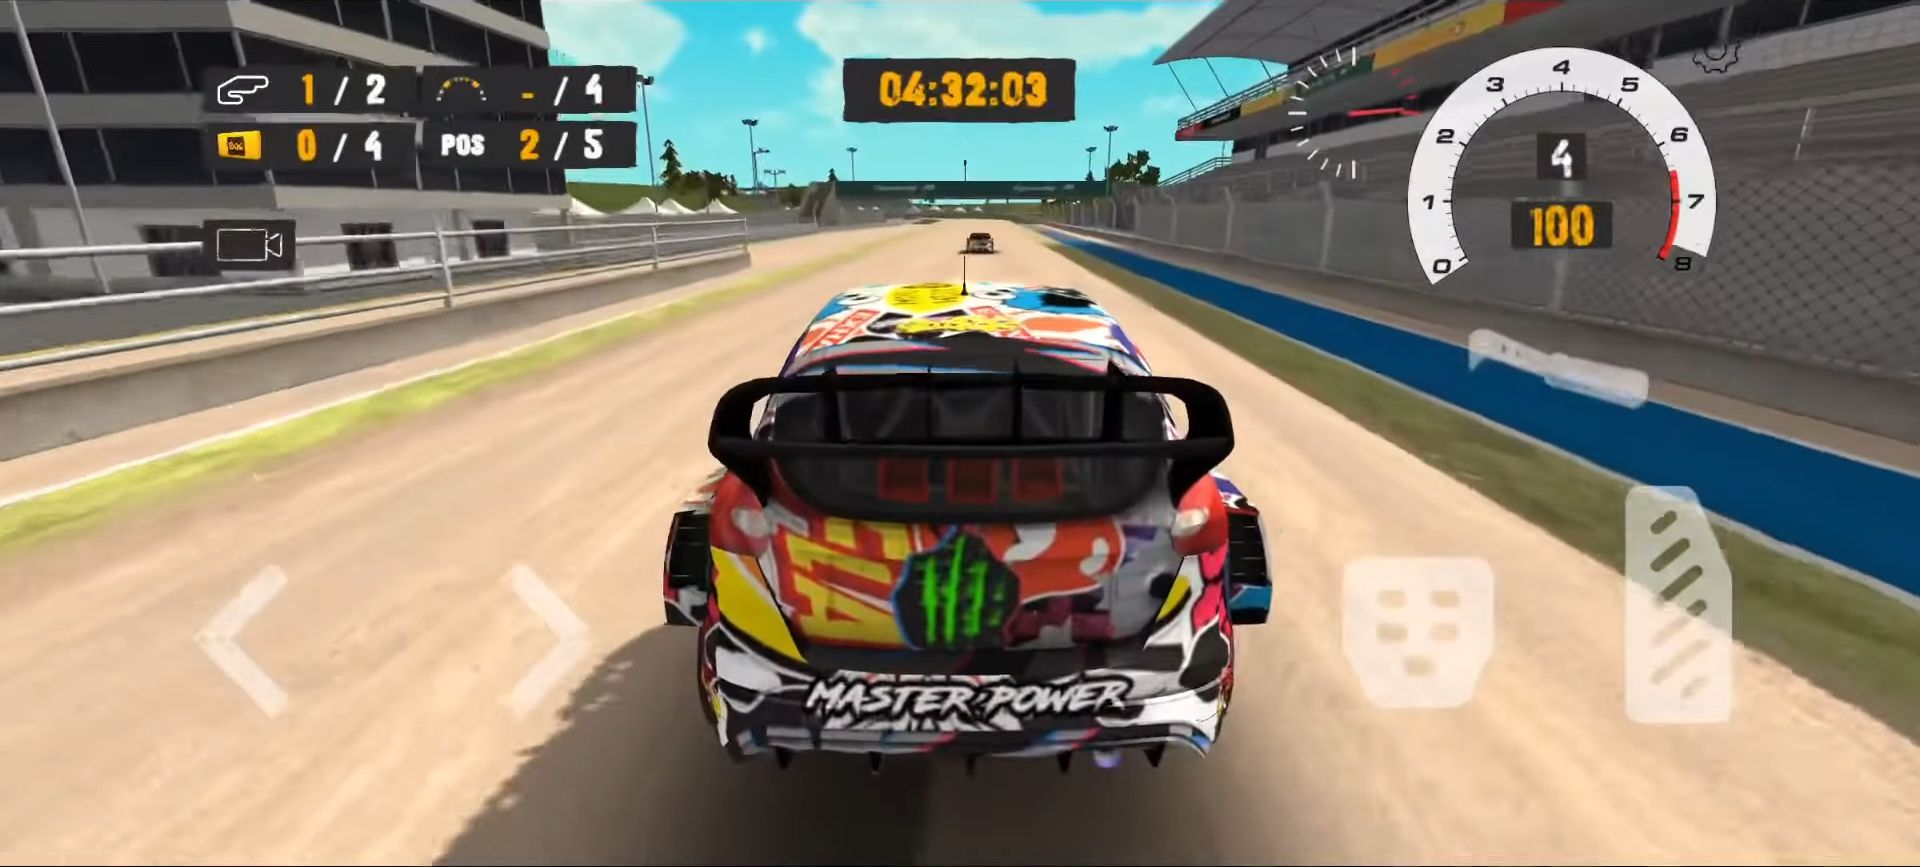 Télécharger Rallycross Track Racing pour Android gratuit.